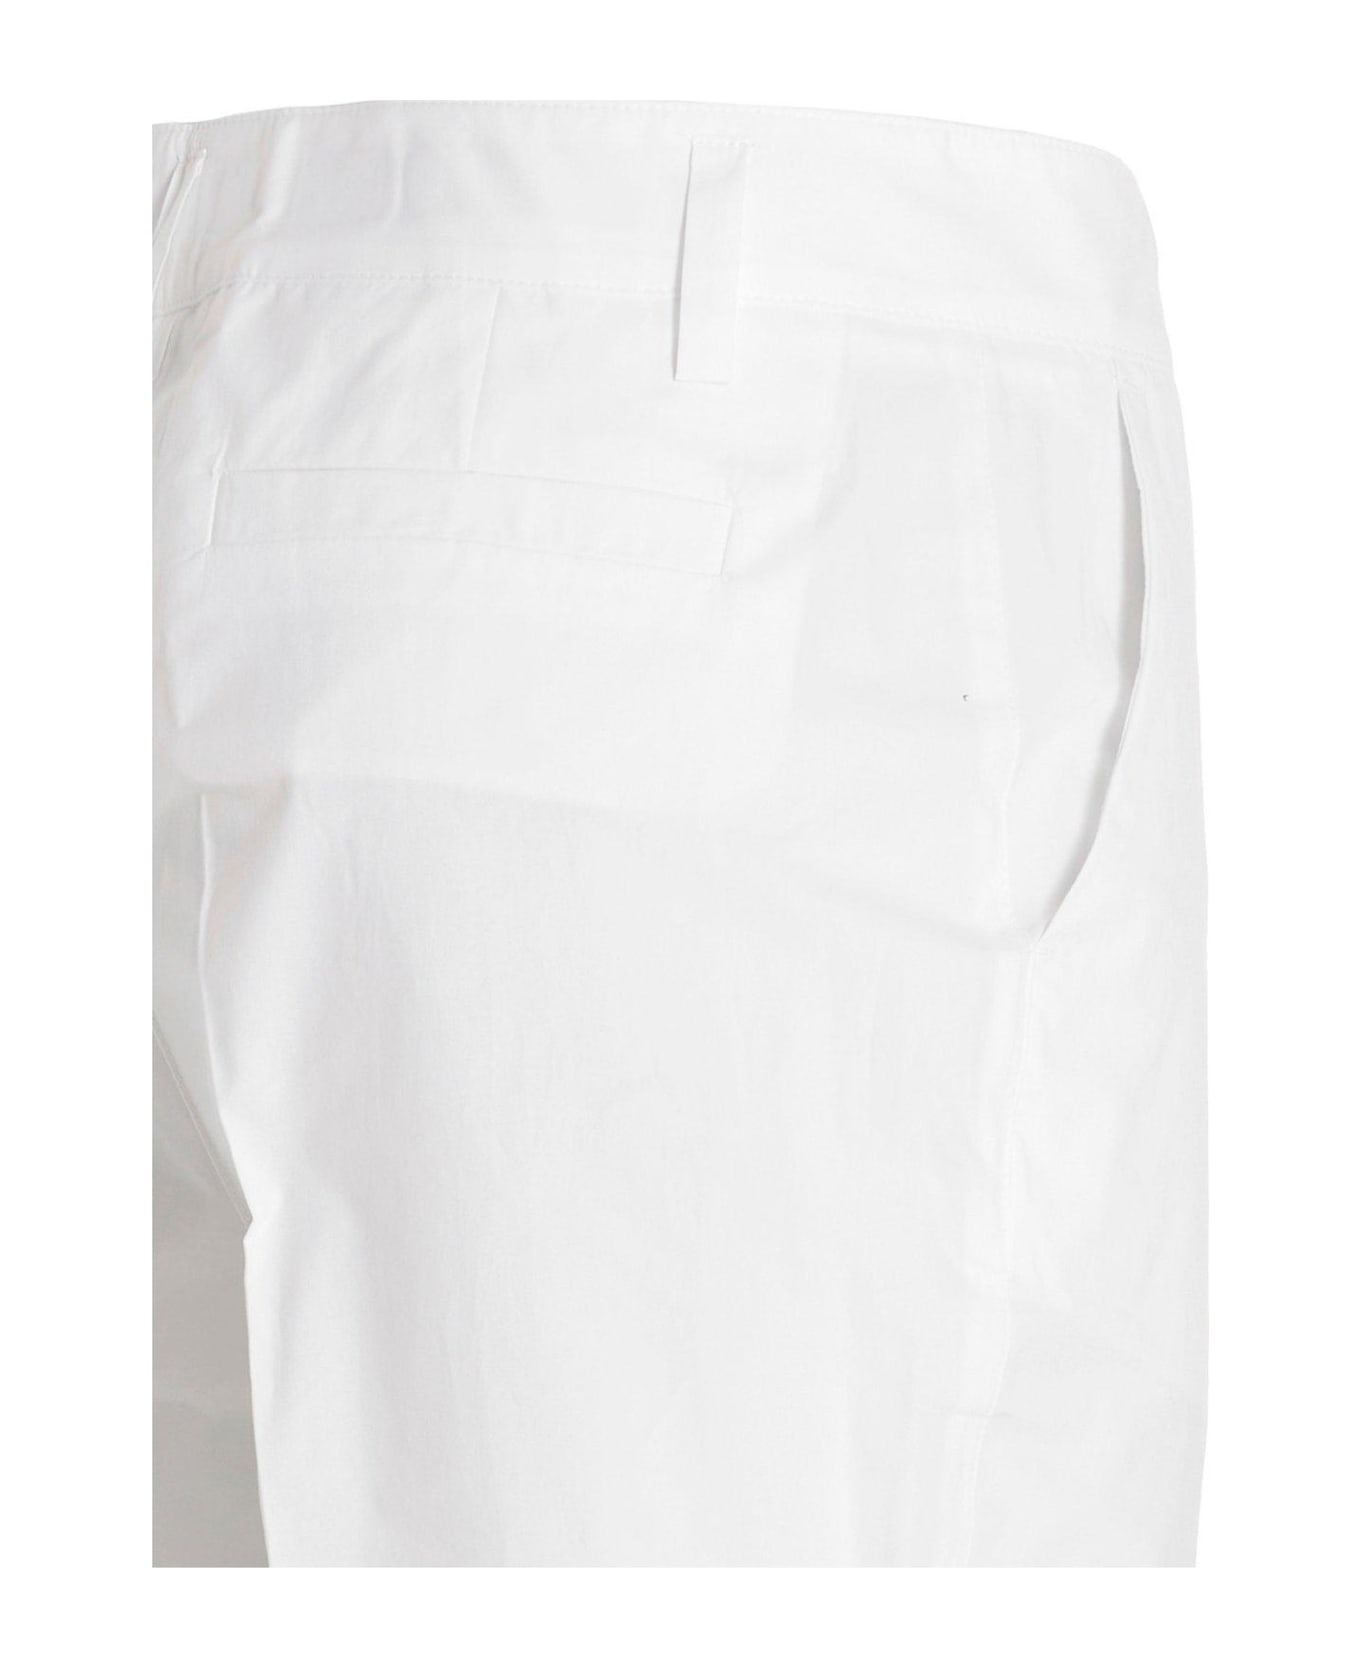 Parosh Slim Fit Trousers - White